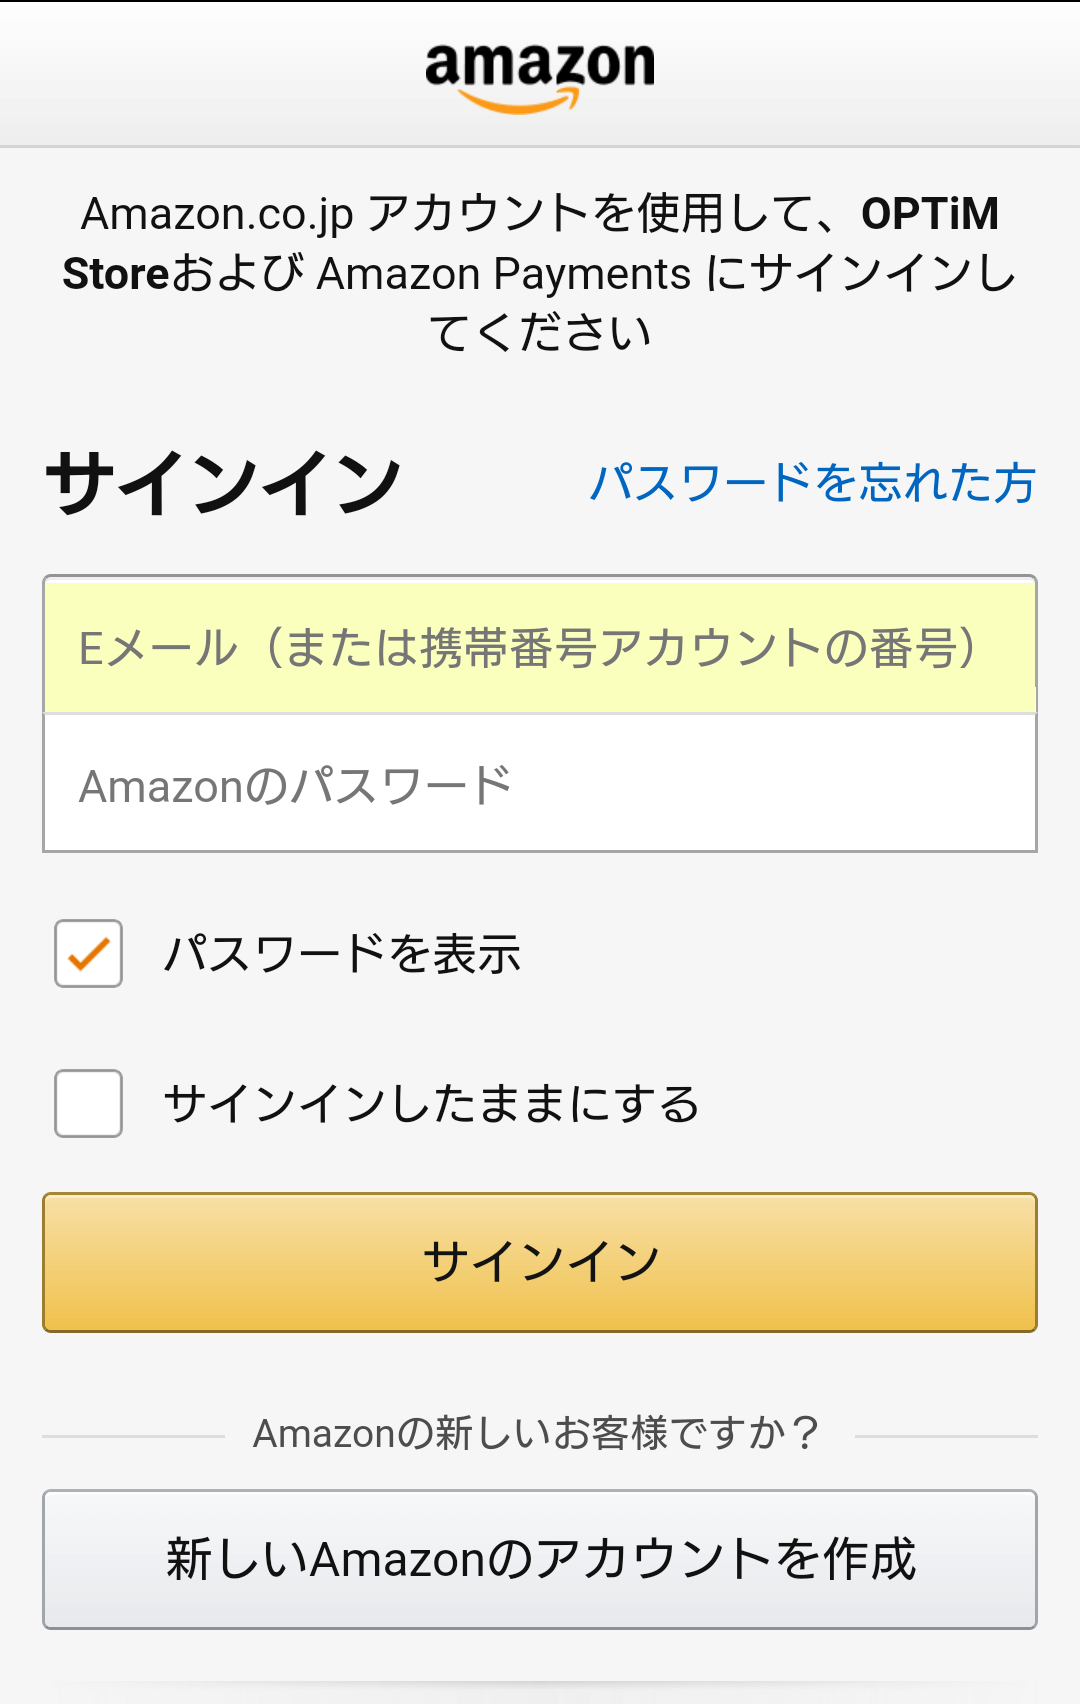 OPTiM Store MYページを開き、Amazonのアカウント情報を入力してログインします。